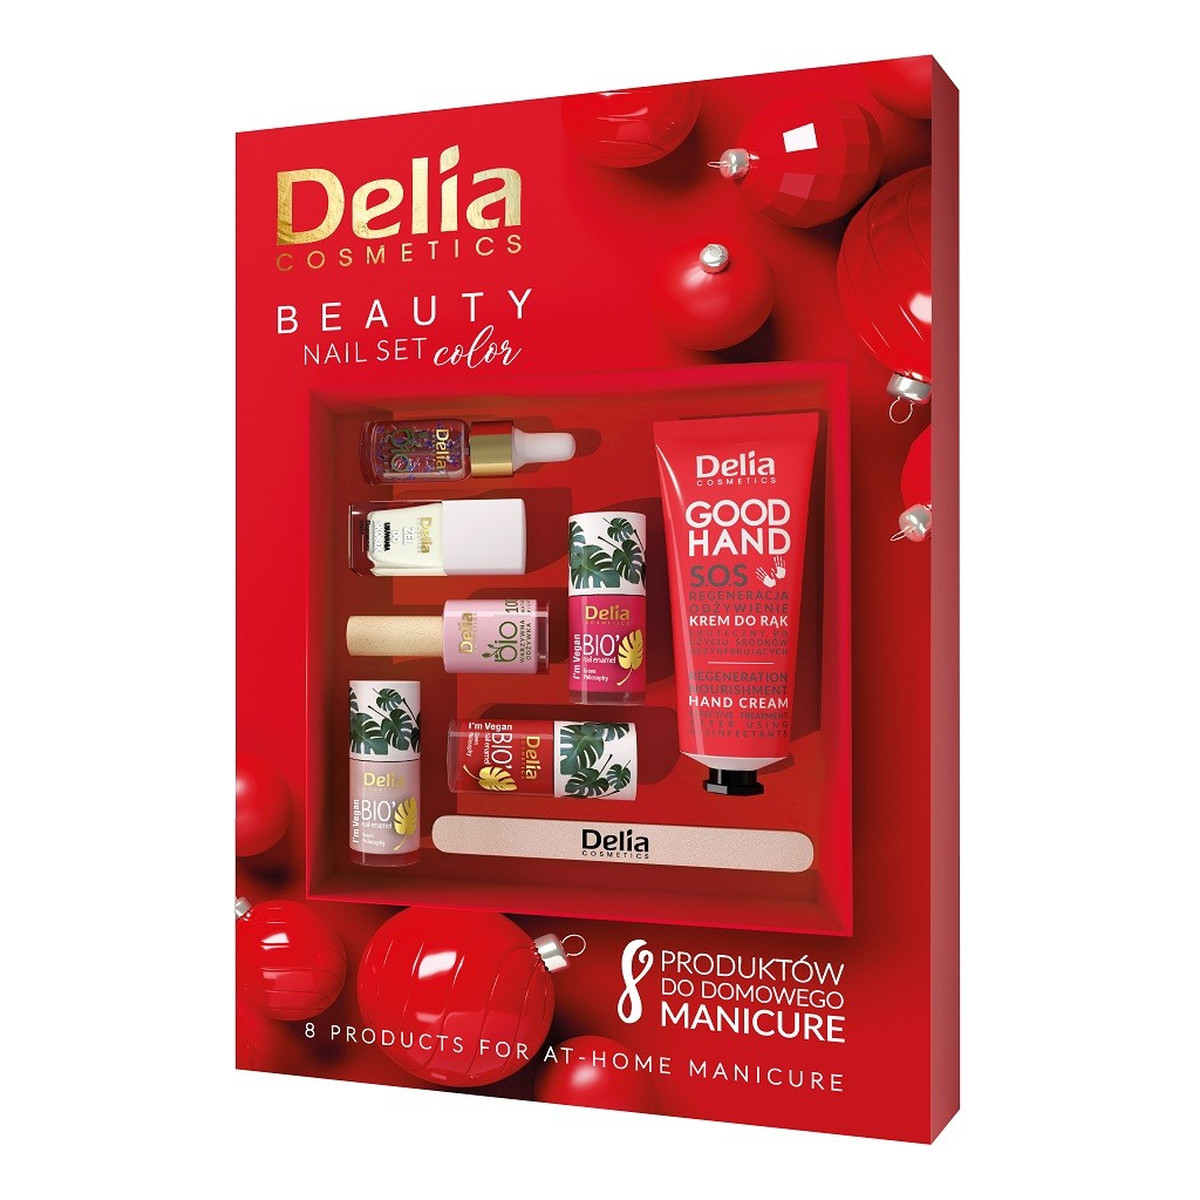 Delia Nail Set Color Kalendarz adwentowy Komplet do manicure